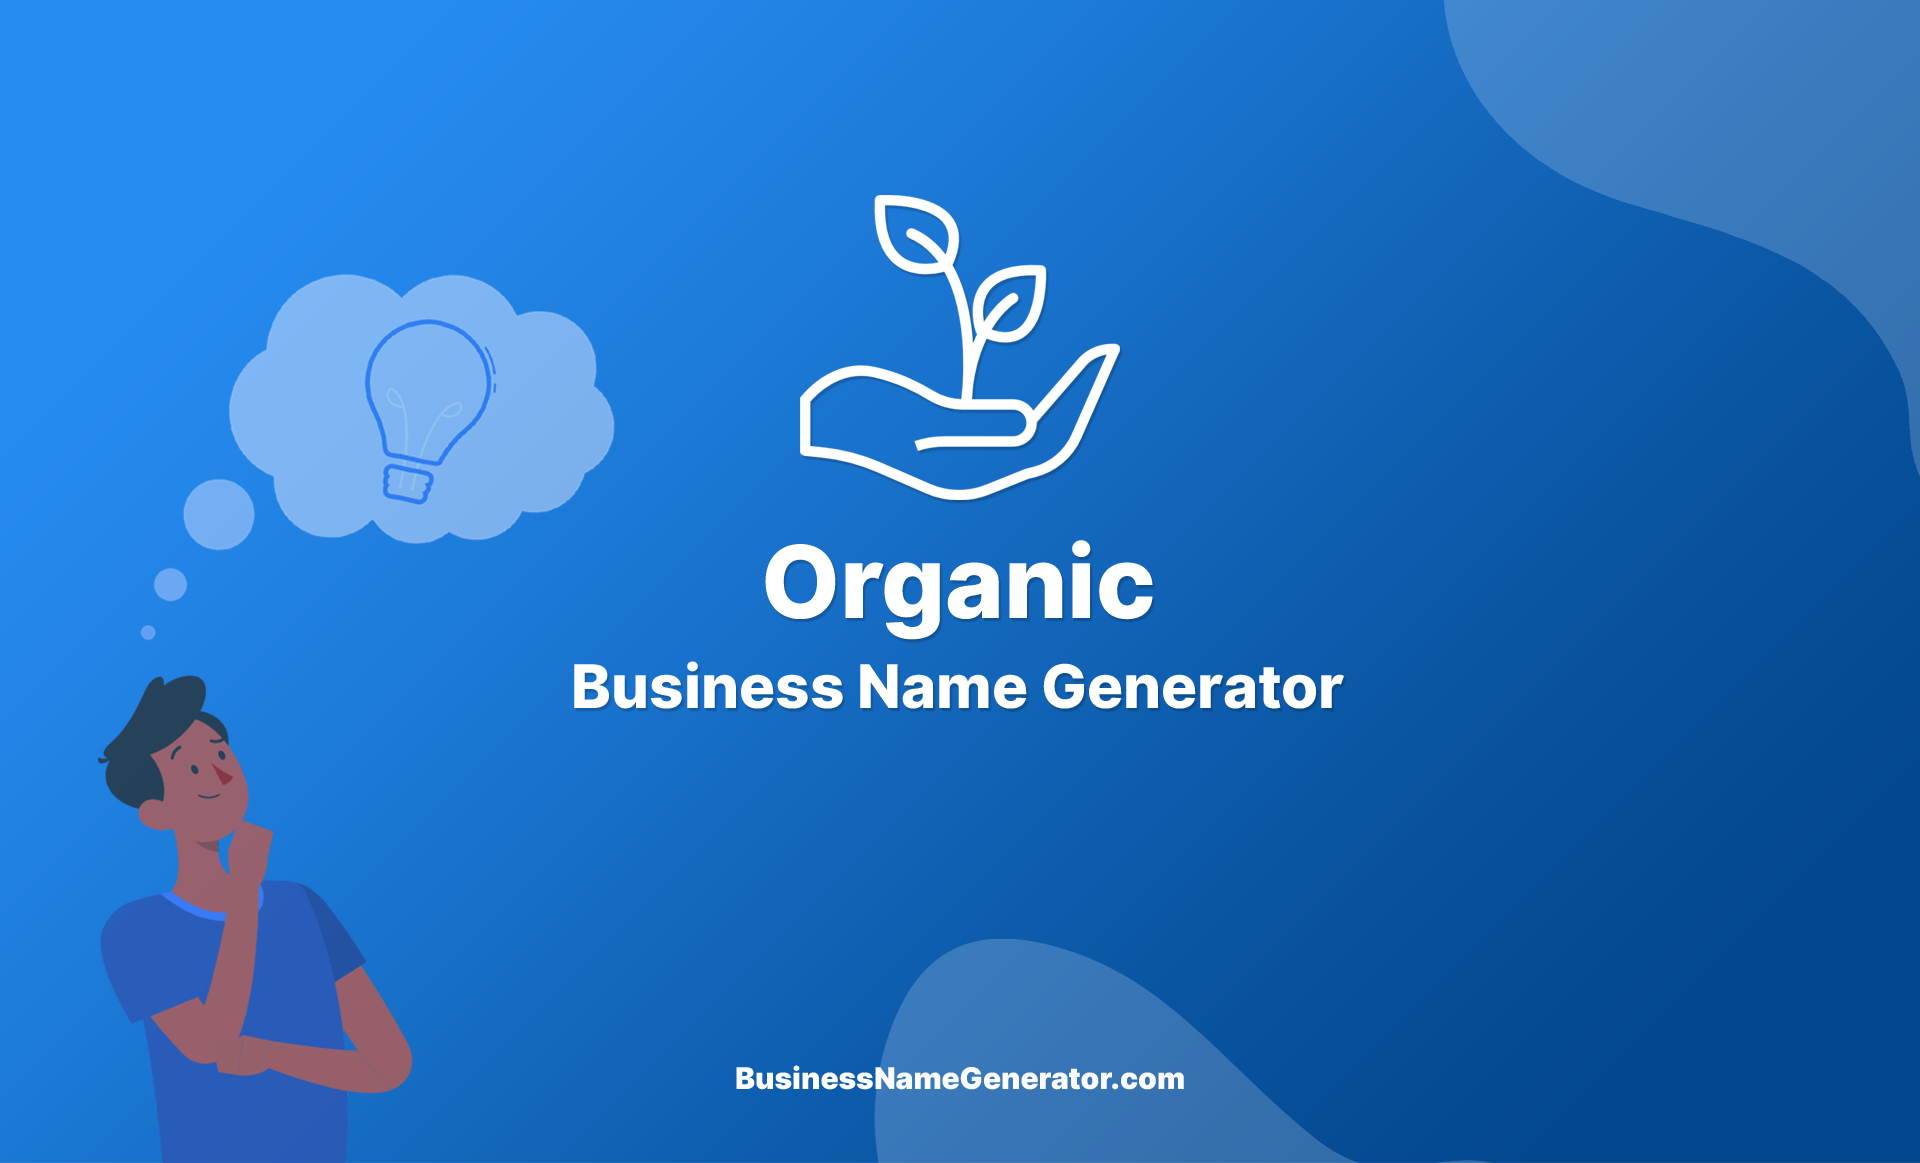 Organic Business Name Generator Guide & Ideas